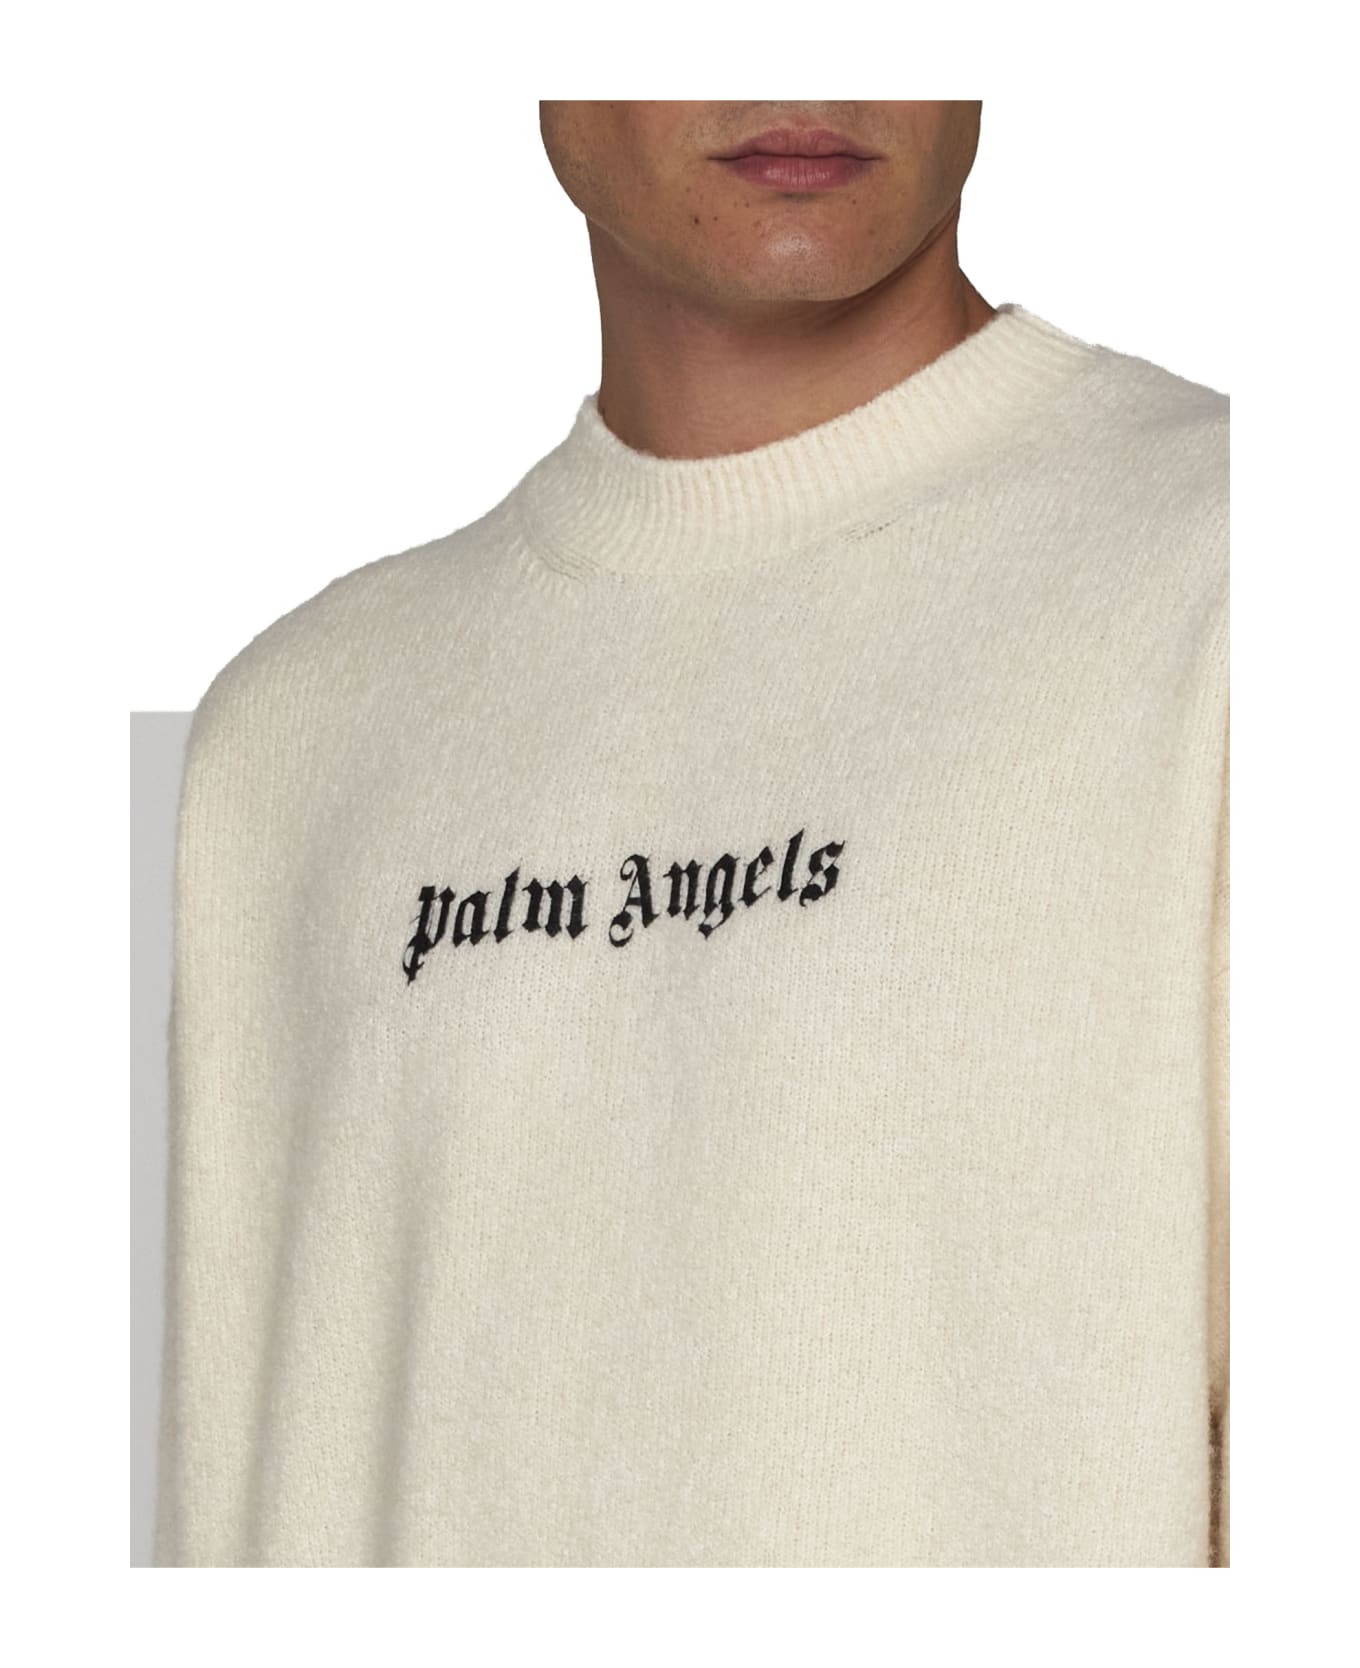 Palm Angels Classic Logo Sweater - Avorio